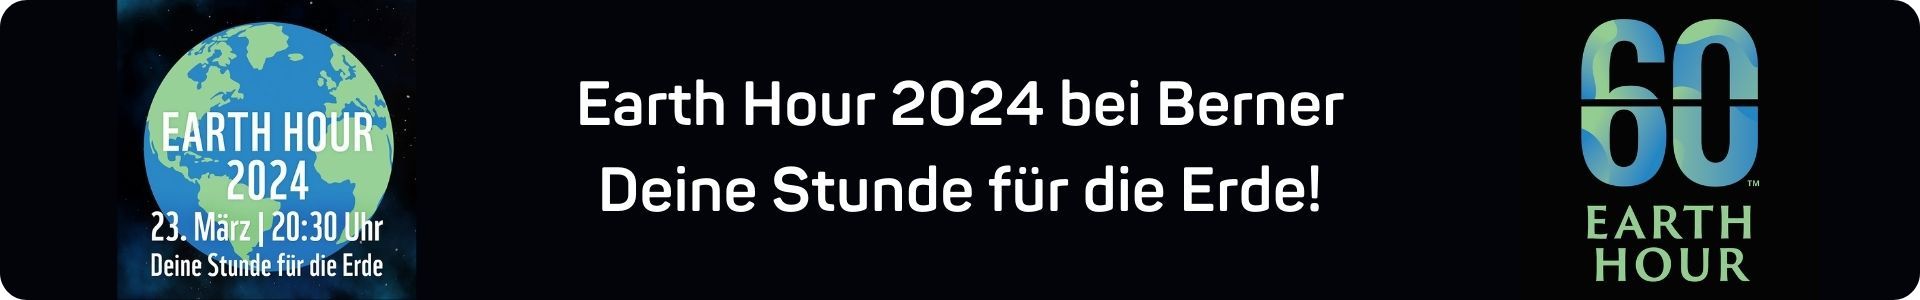 Berner Earth Hour 2024